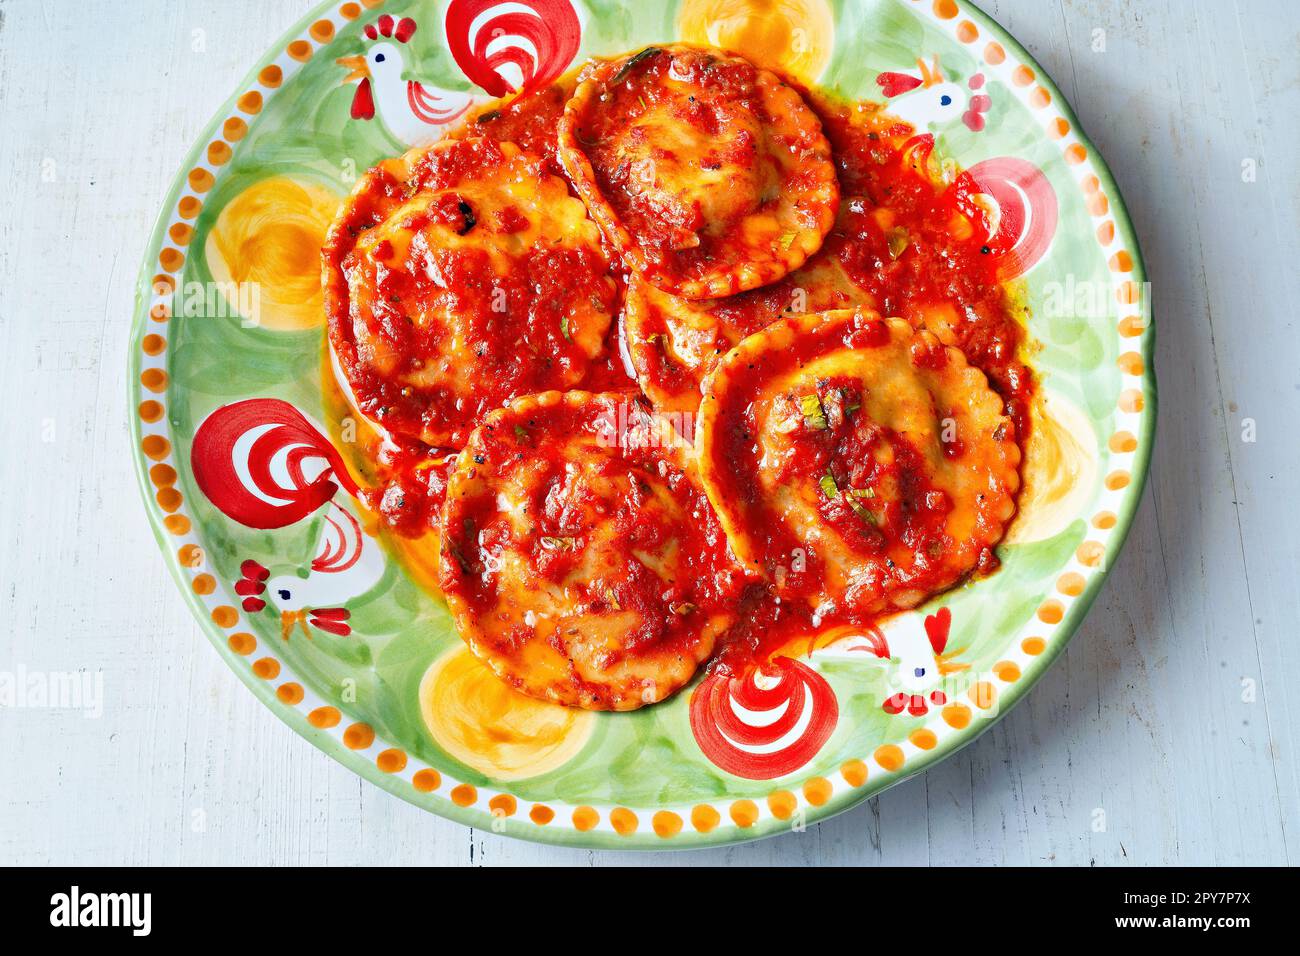 italian ravioli pasta in tomato sauce Stock Photo